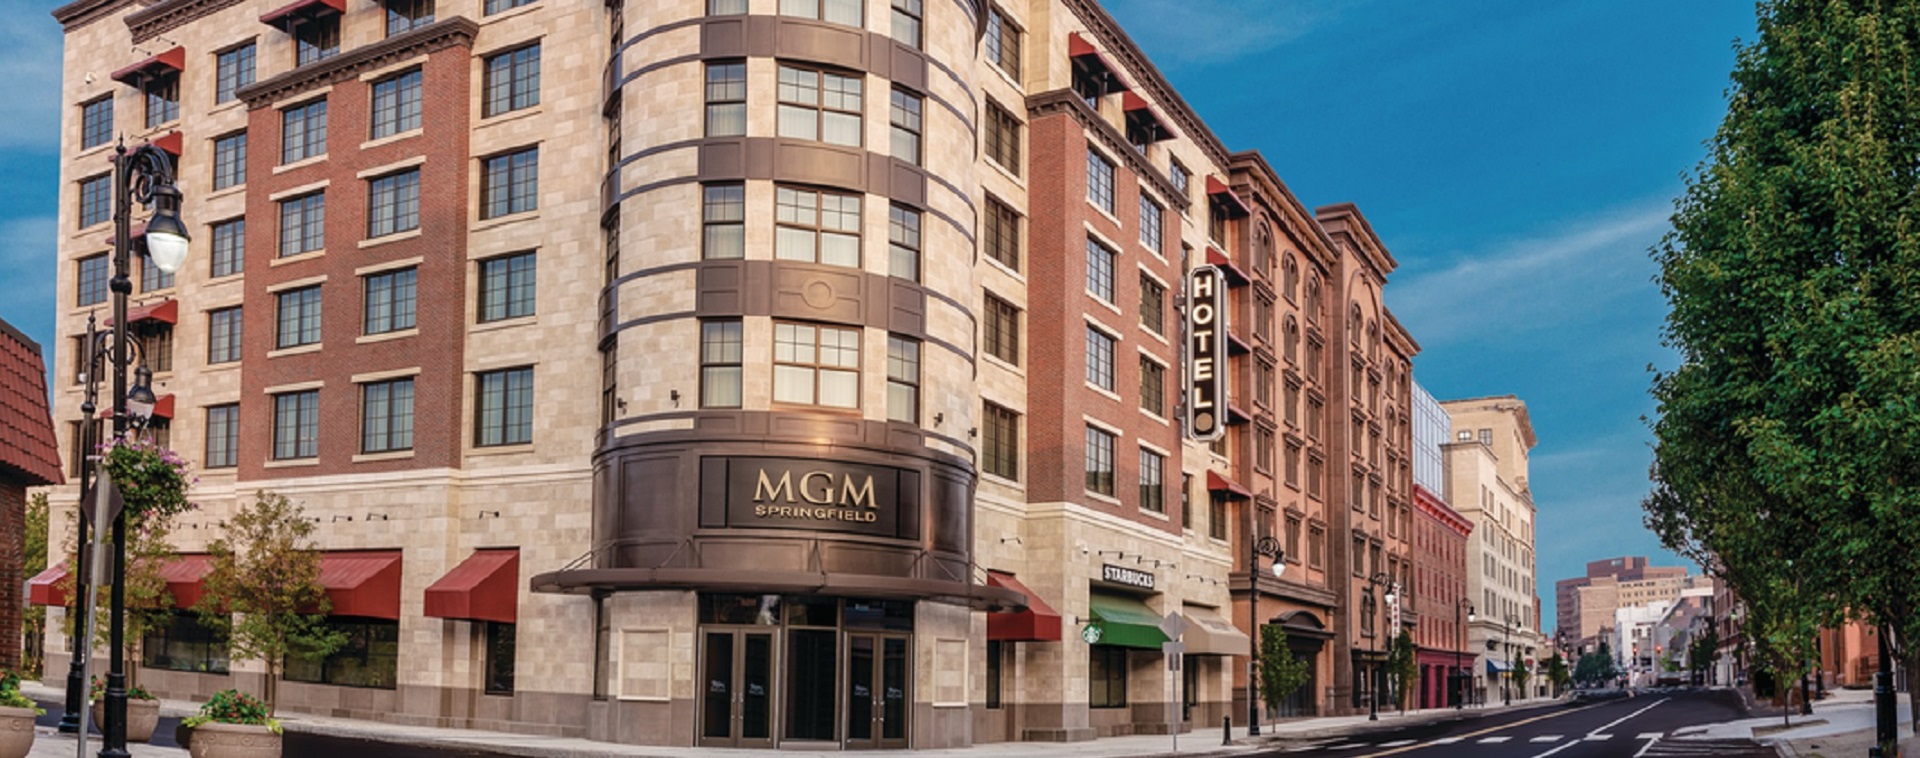 Jobs in Springfield, Massachusetts MGM Resorts